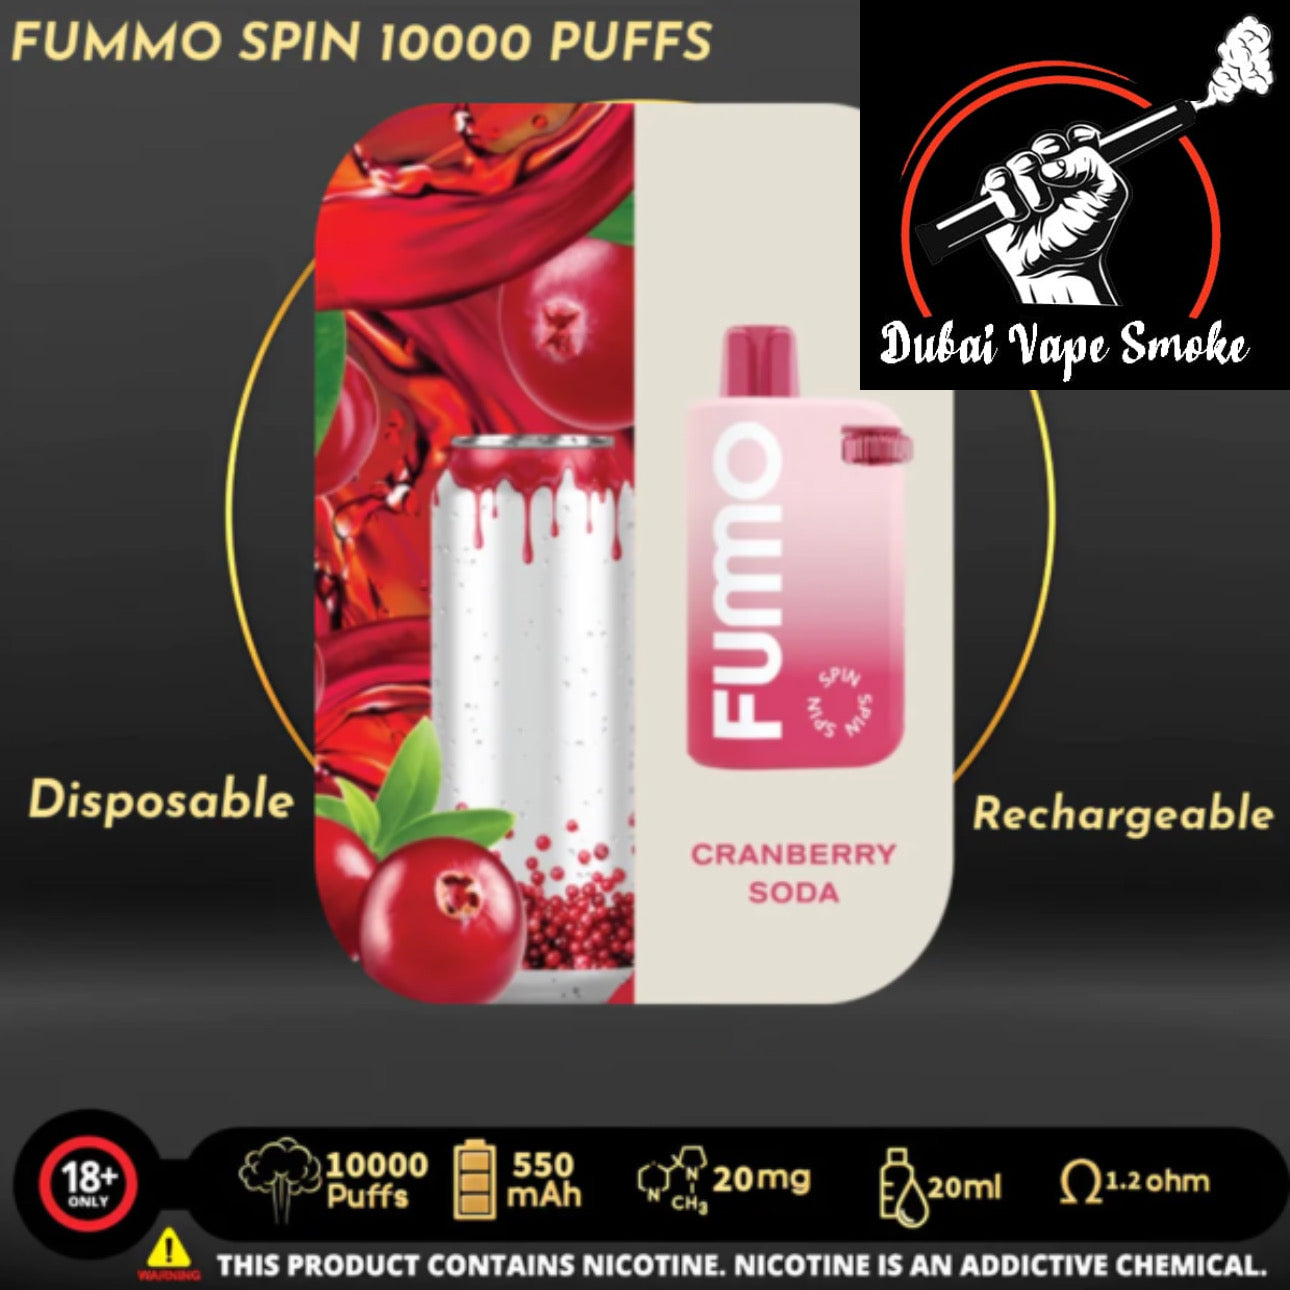 Fumo Spin 10000 puffs disposable vape